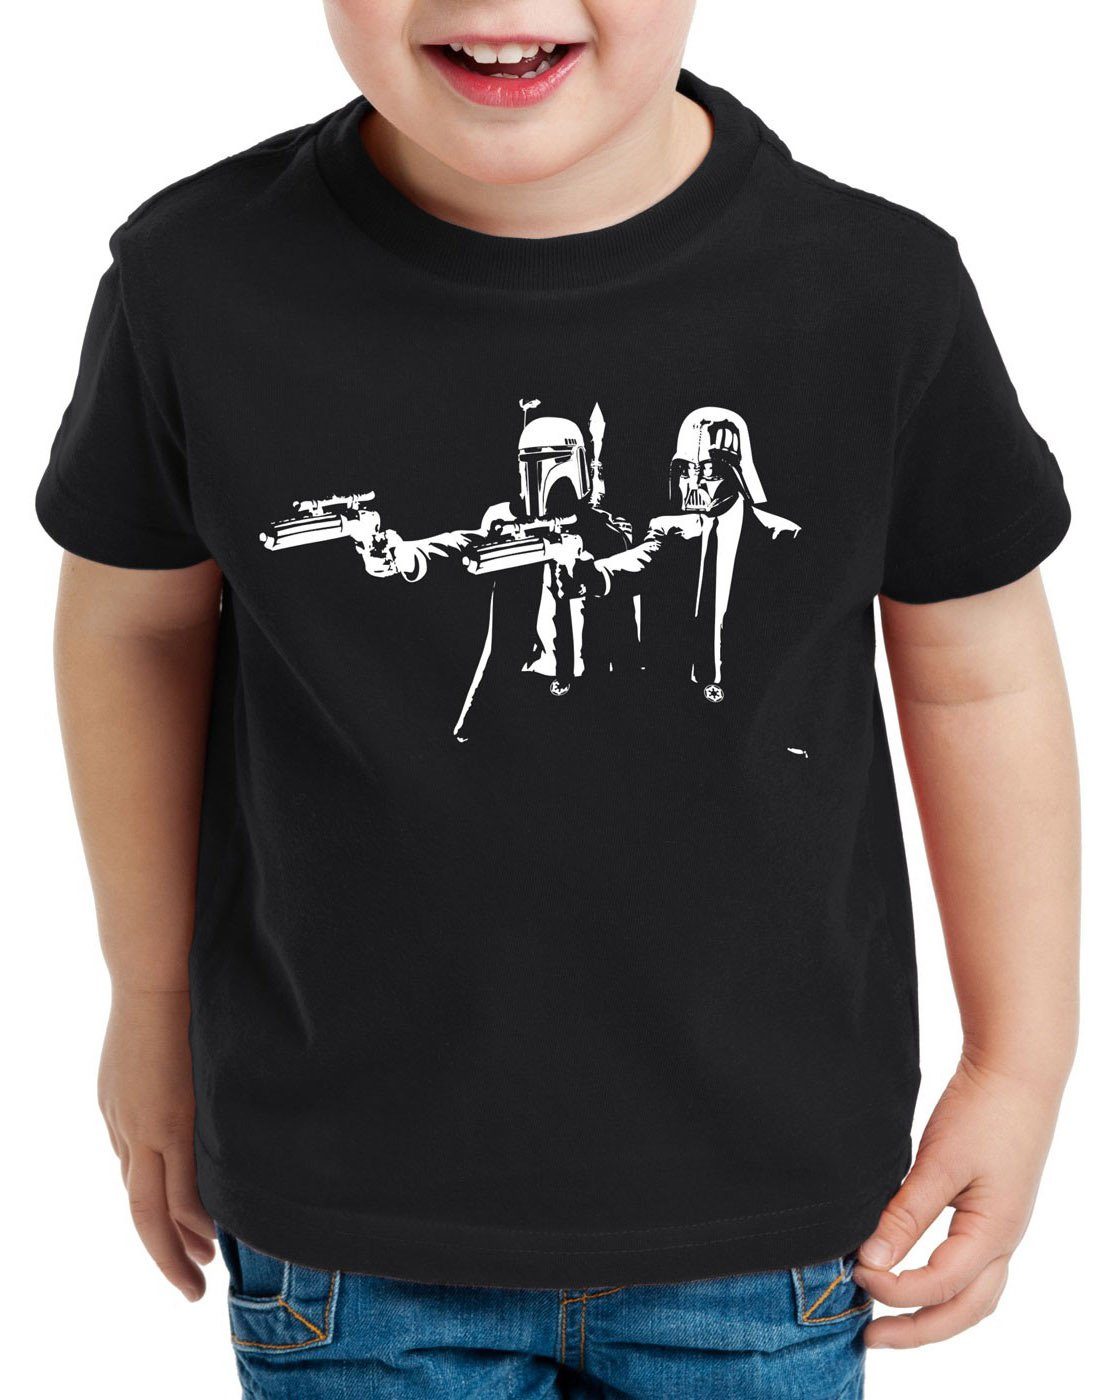 Fiction pulp schwarz T-Shirt wars style3 imperium Kinder star Darth boba fett Print-Shirt